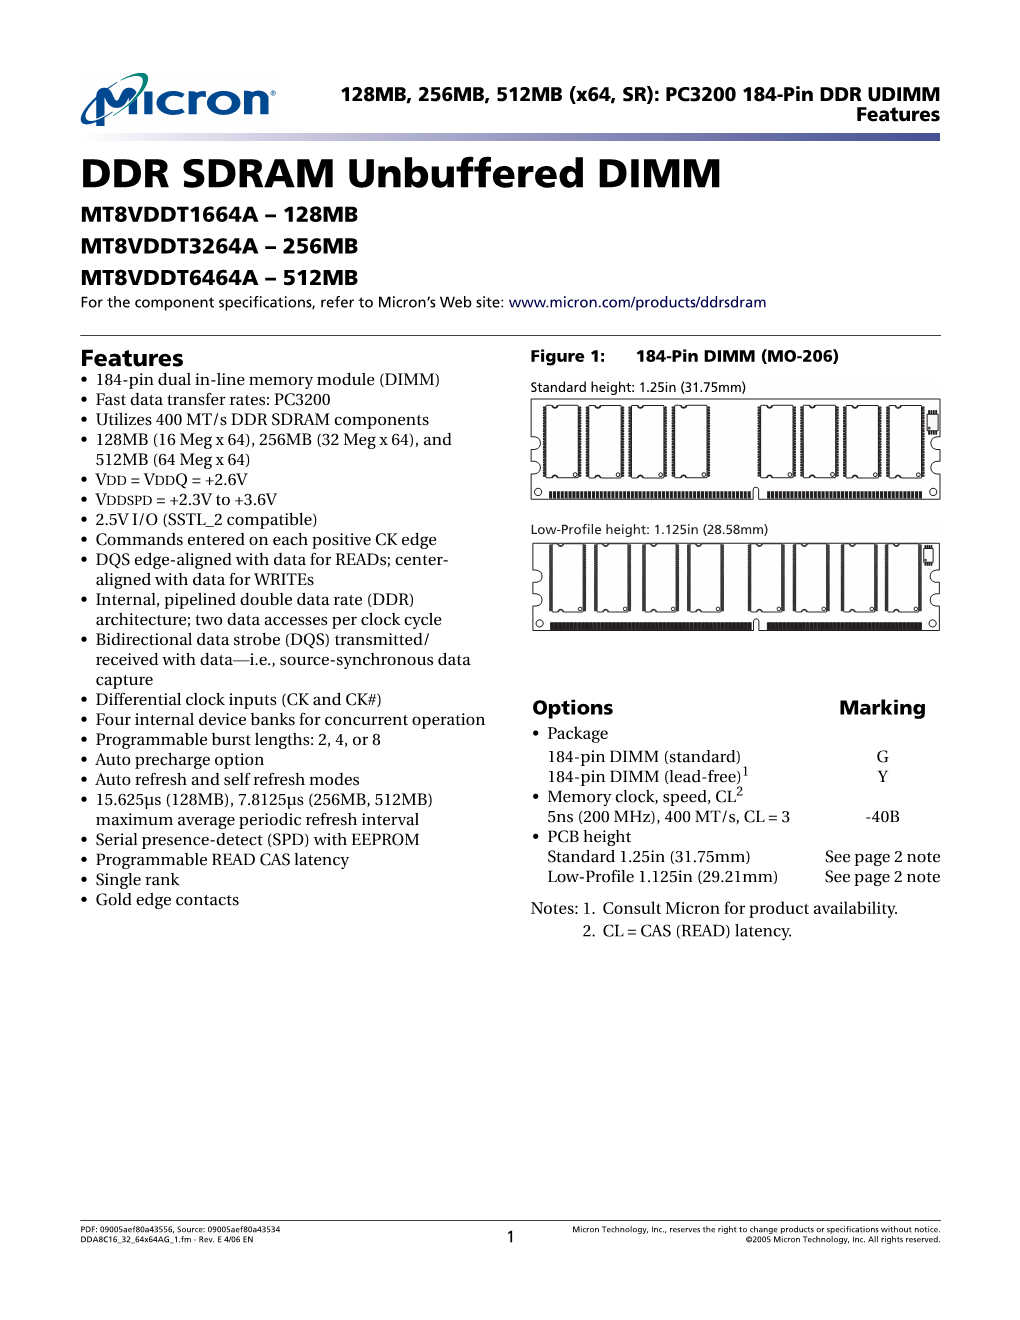 (X64, SR) 184-Pin DDR UDIMM Data Sheet